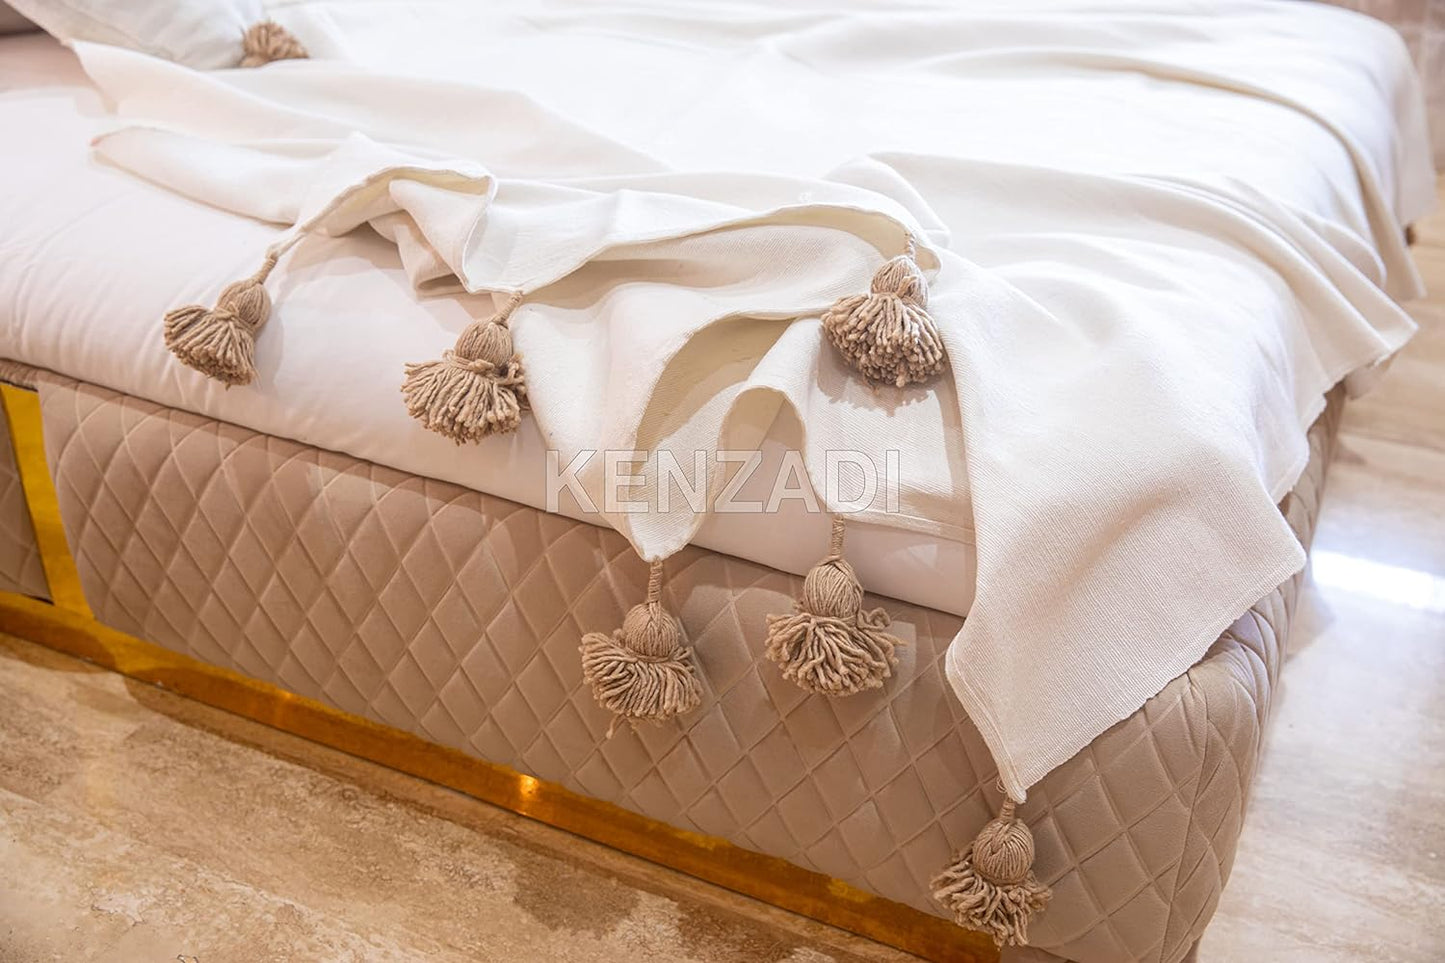 KENZADI Moroccan Handmade Pompom Blanket, Throw Blanket, Pom Pom Blanket, Boho Blanket, Bed Cover, Warm Blanket, Cozy Blanket ( White with pom Brown, Queen (U.S. Standard)) - Handmade by My Poufs